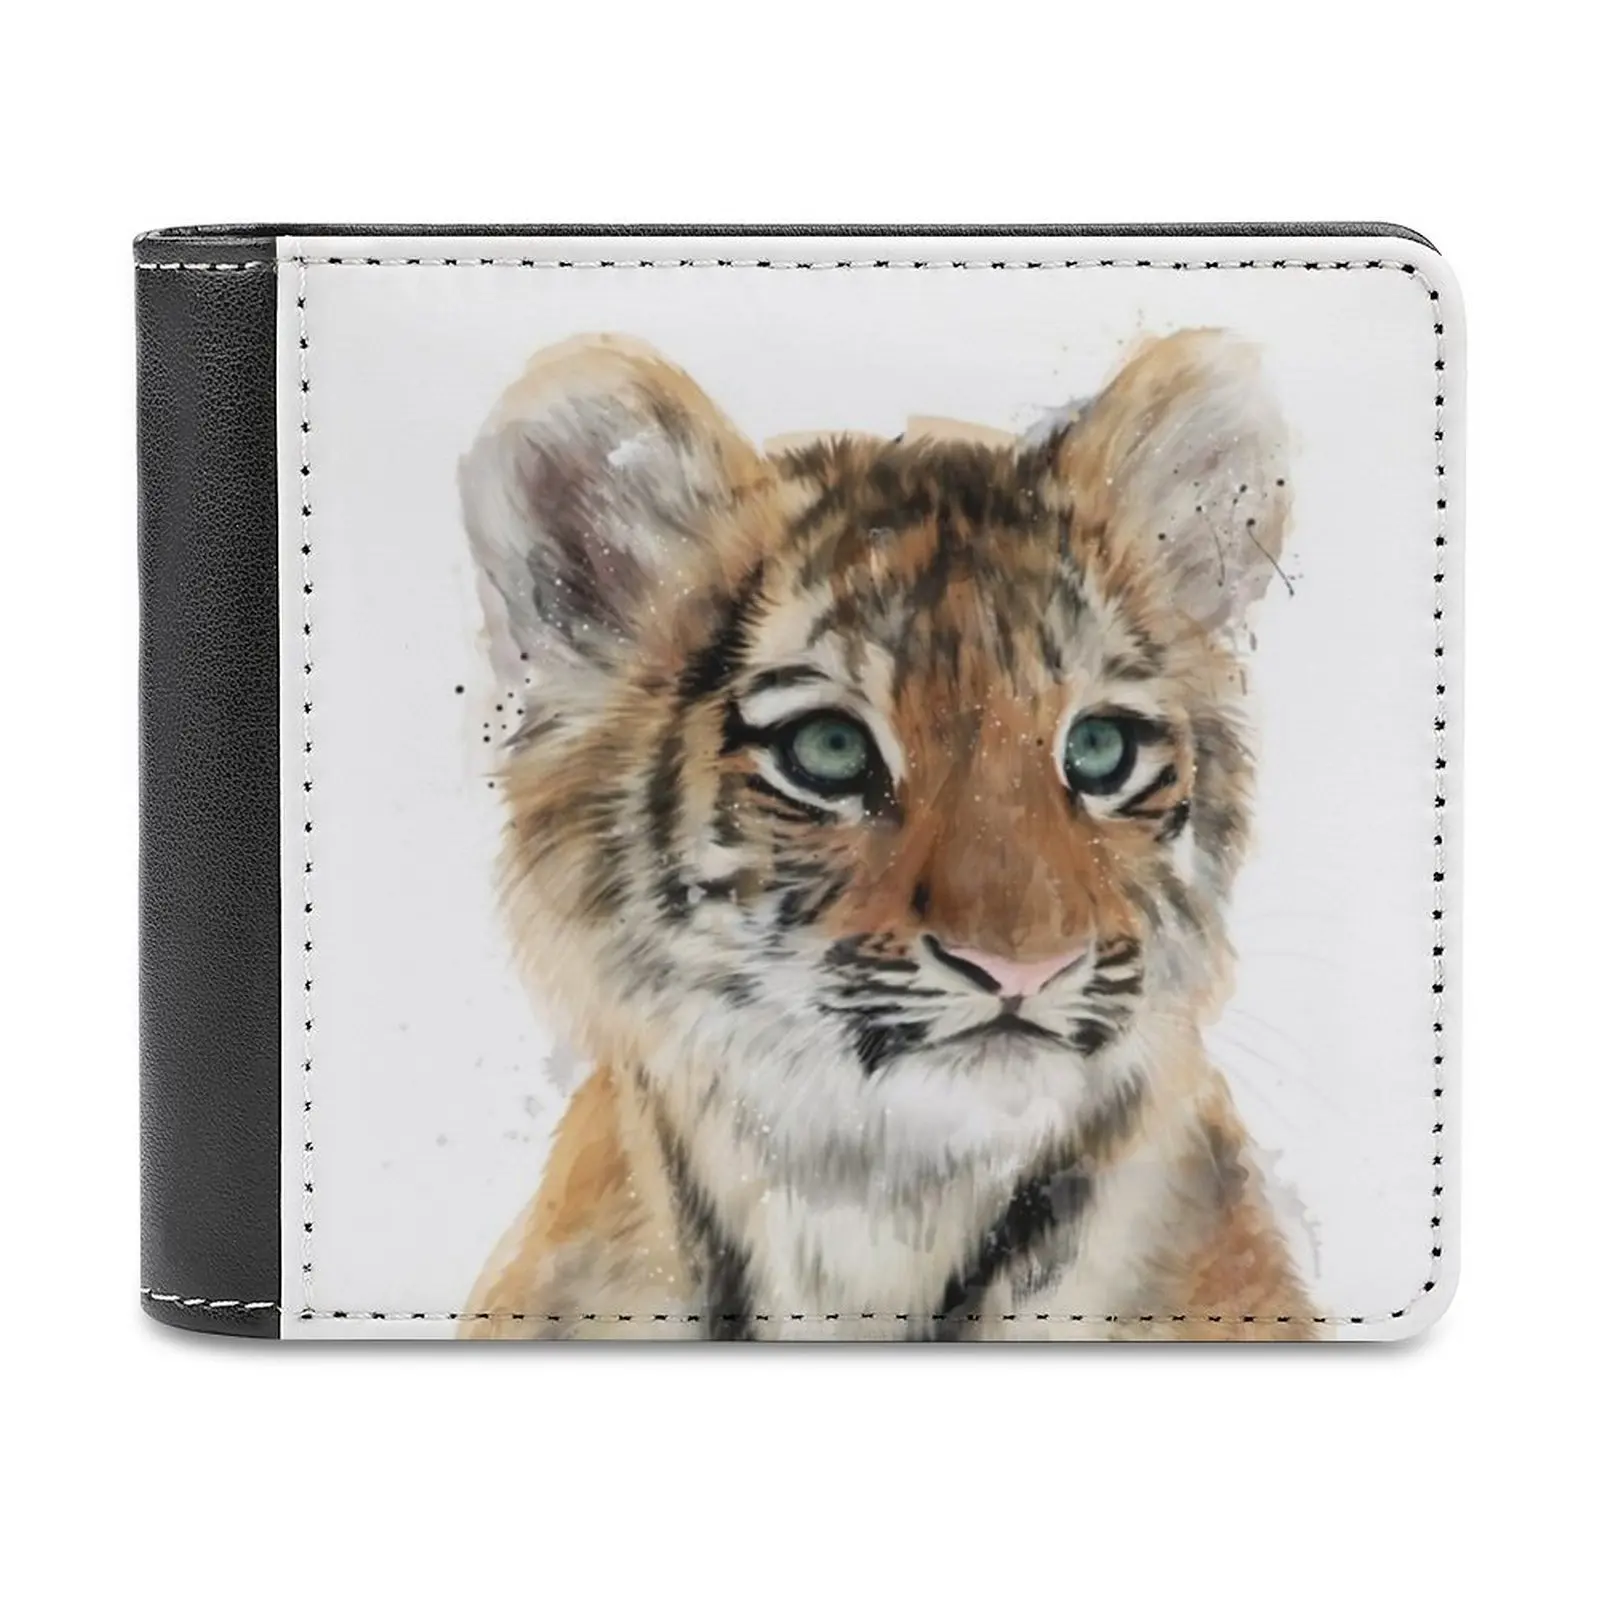 

Little Tiger Leather Wallet Men's Wallet Purse Money Clips Tiger Tigers Baby Cute Portrait Wildlife Animal Animals Fauna